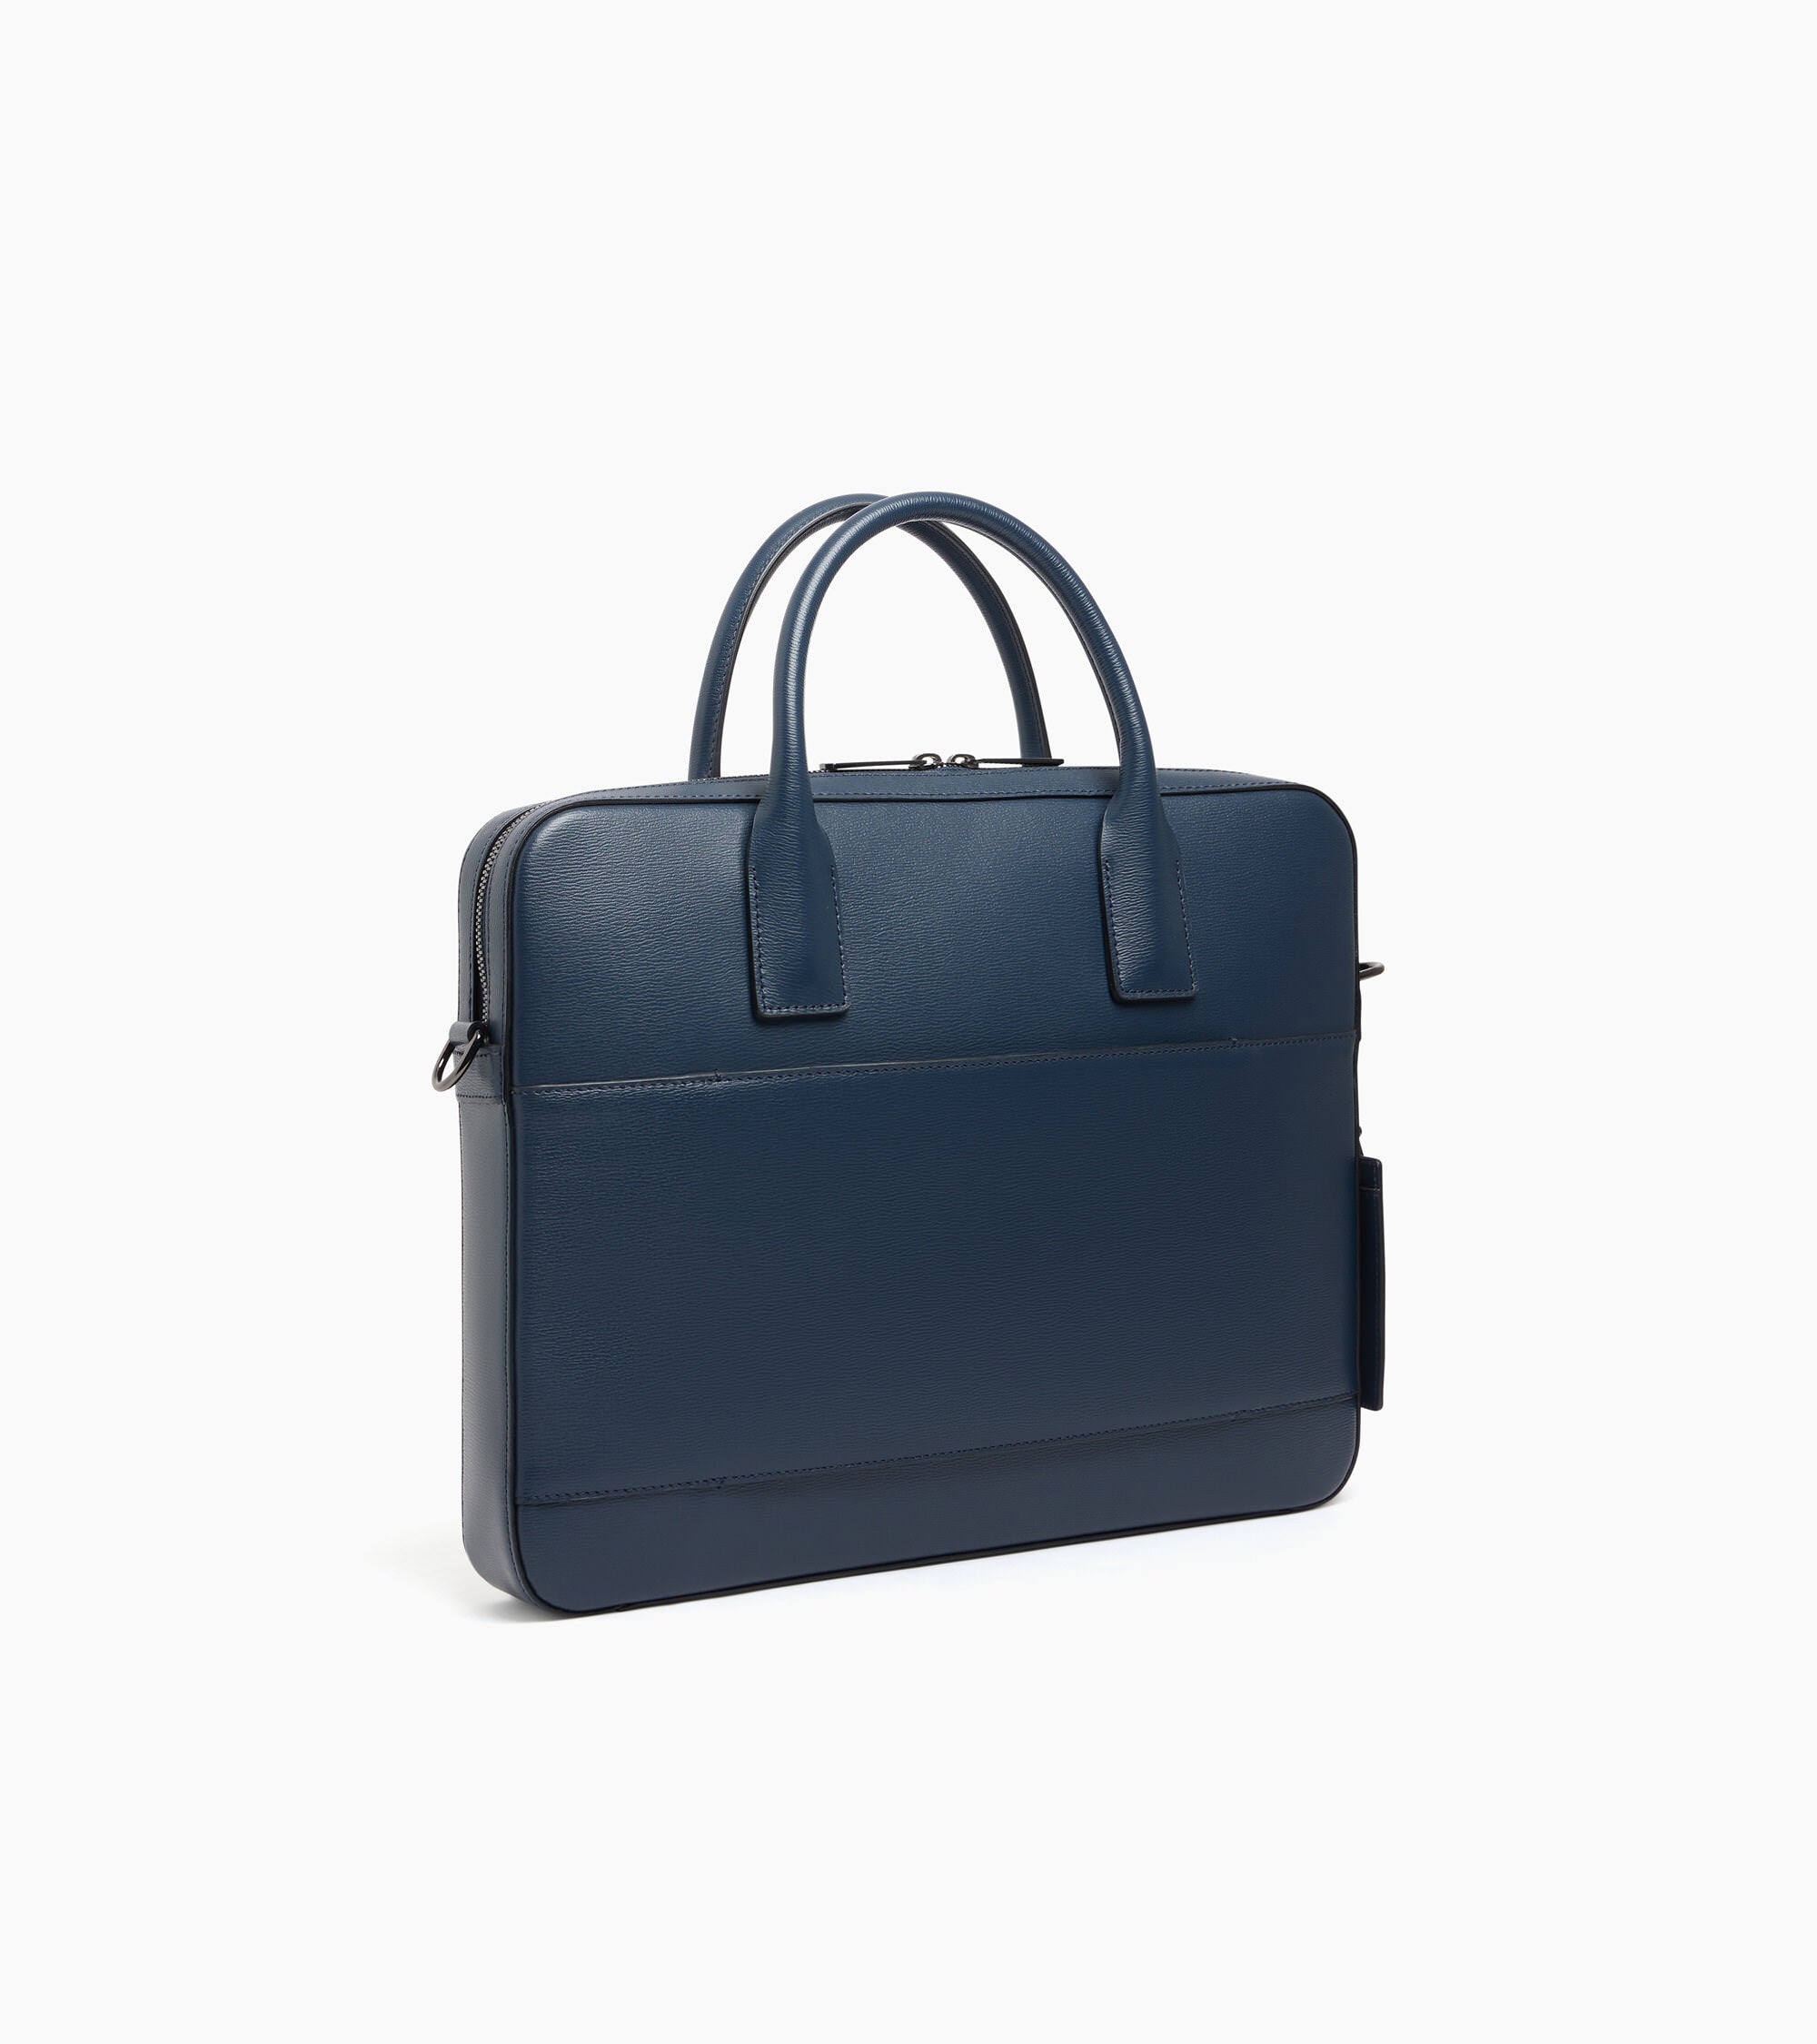 Emile slim, 14" briefcase in cork leather